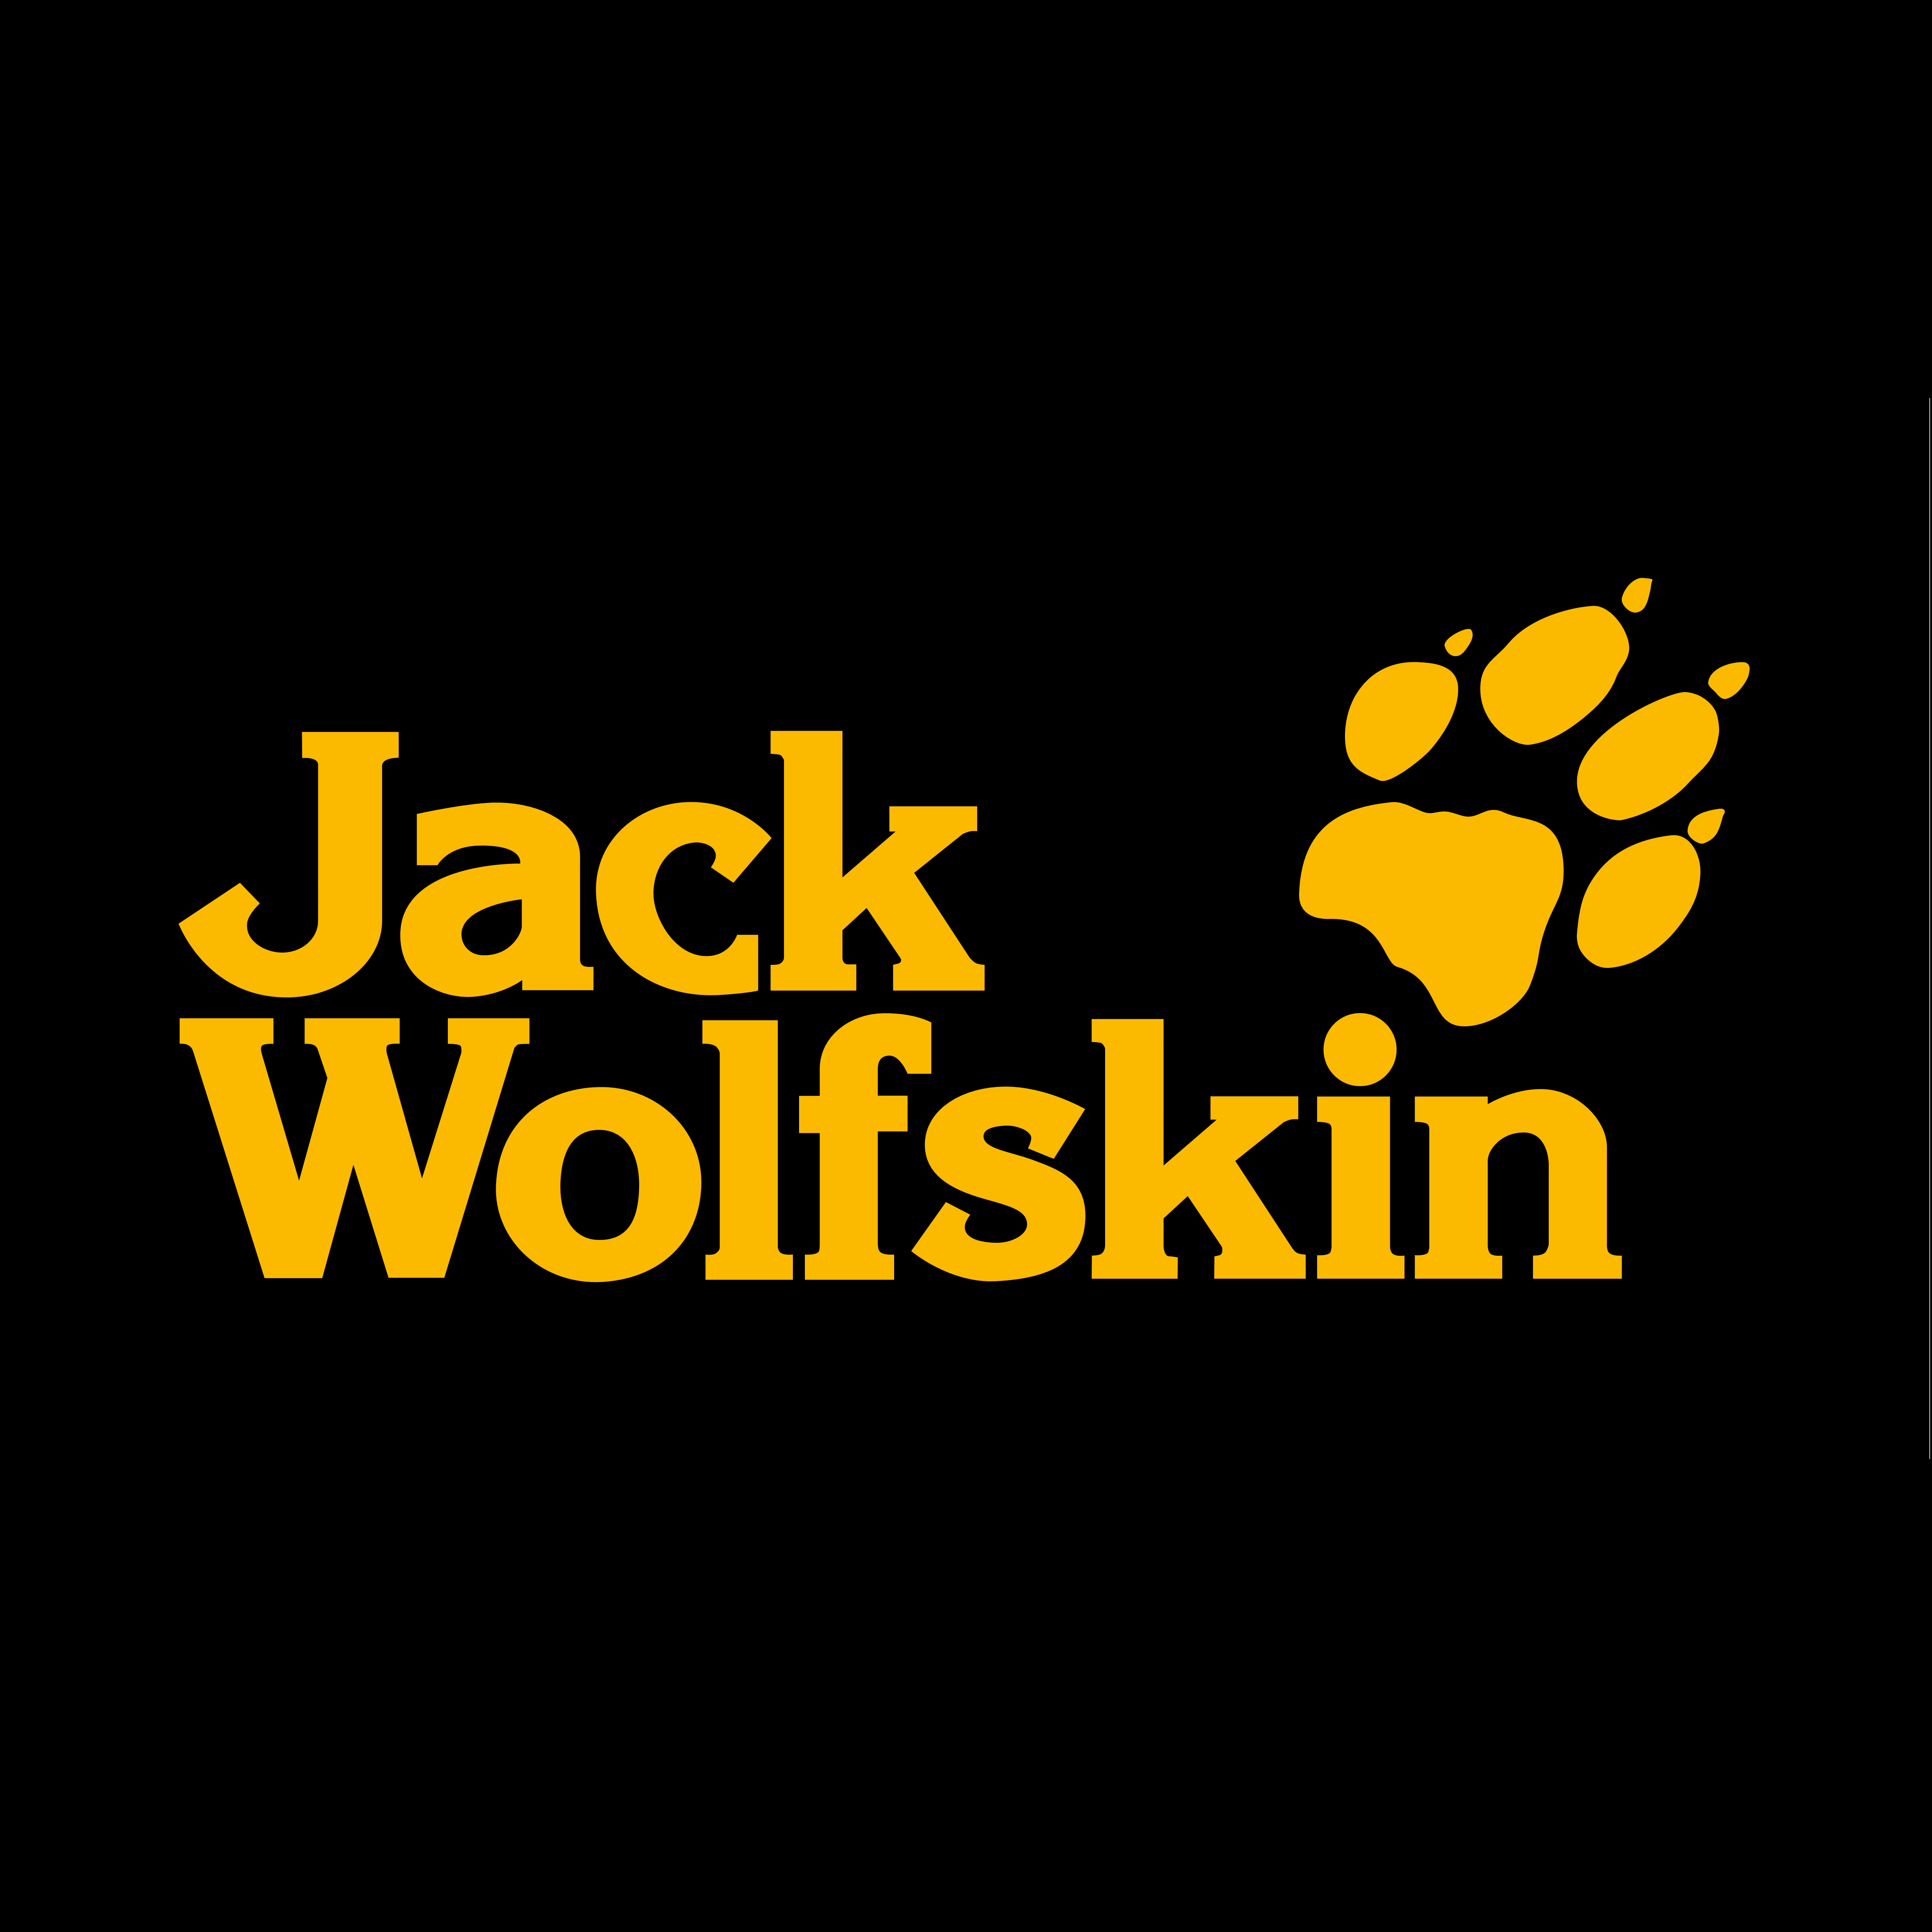 Jack Wolfskin Logo - Jack Wolfskin – Logos Download